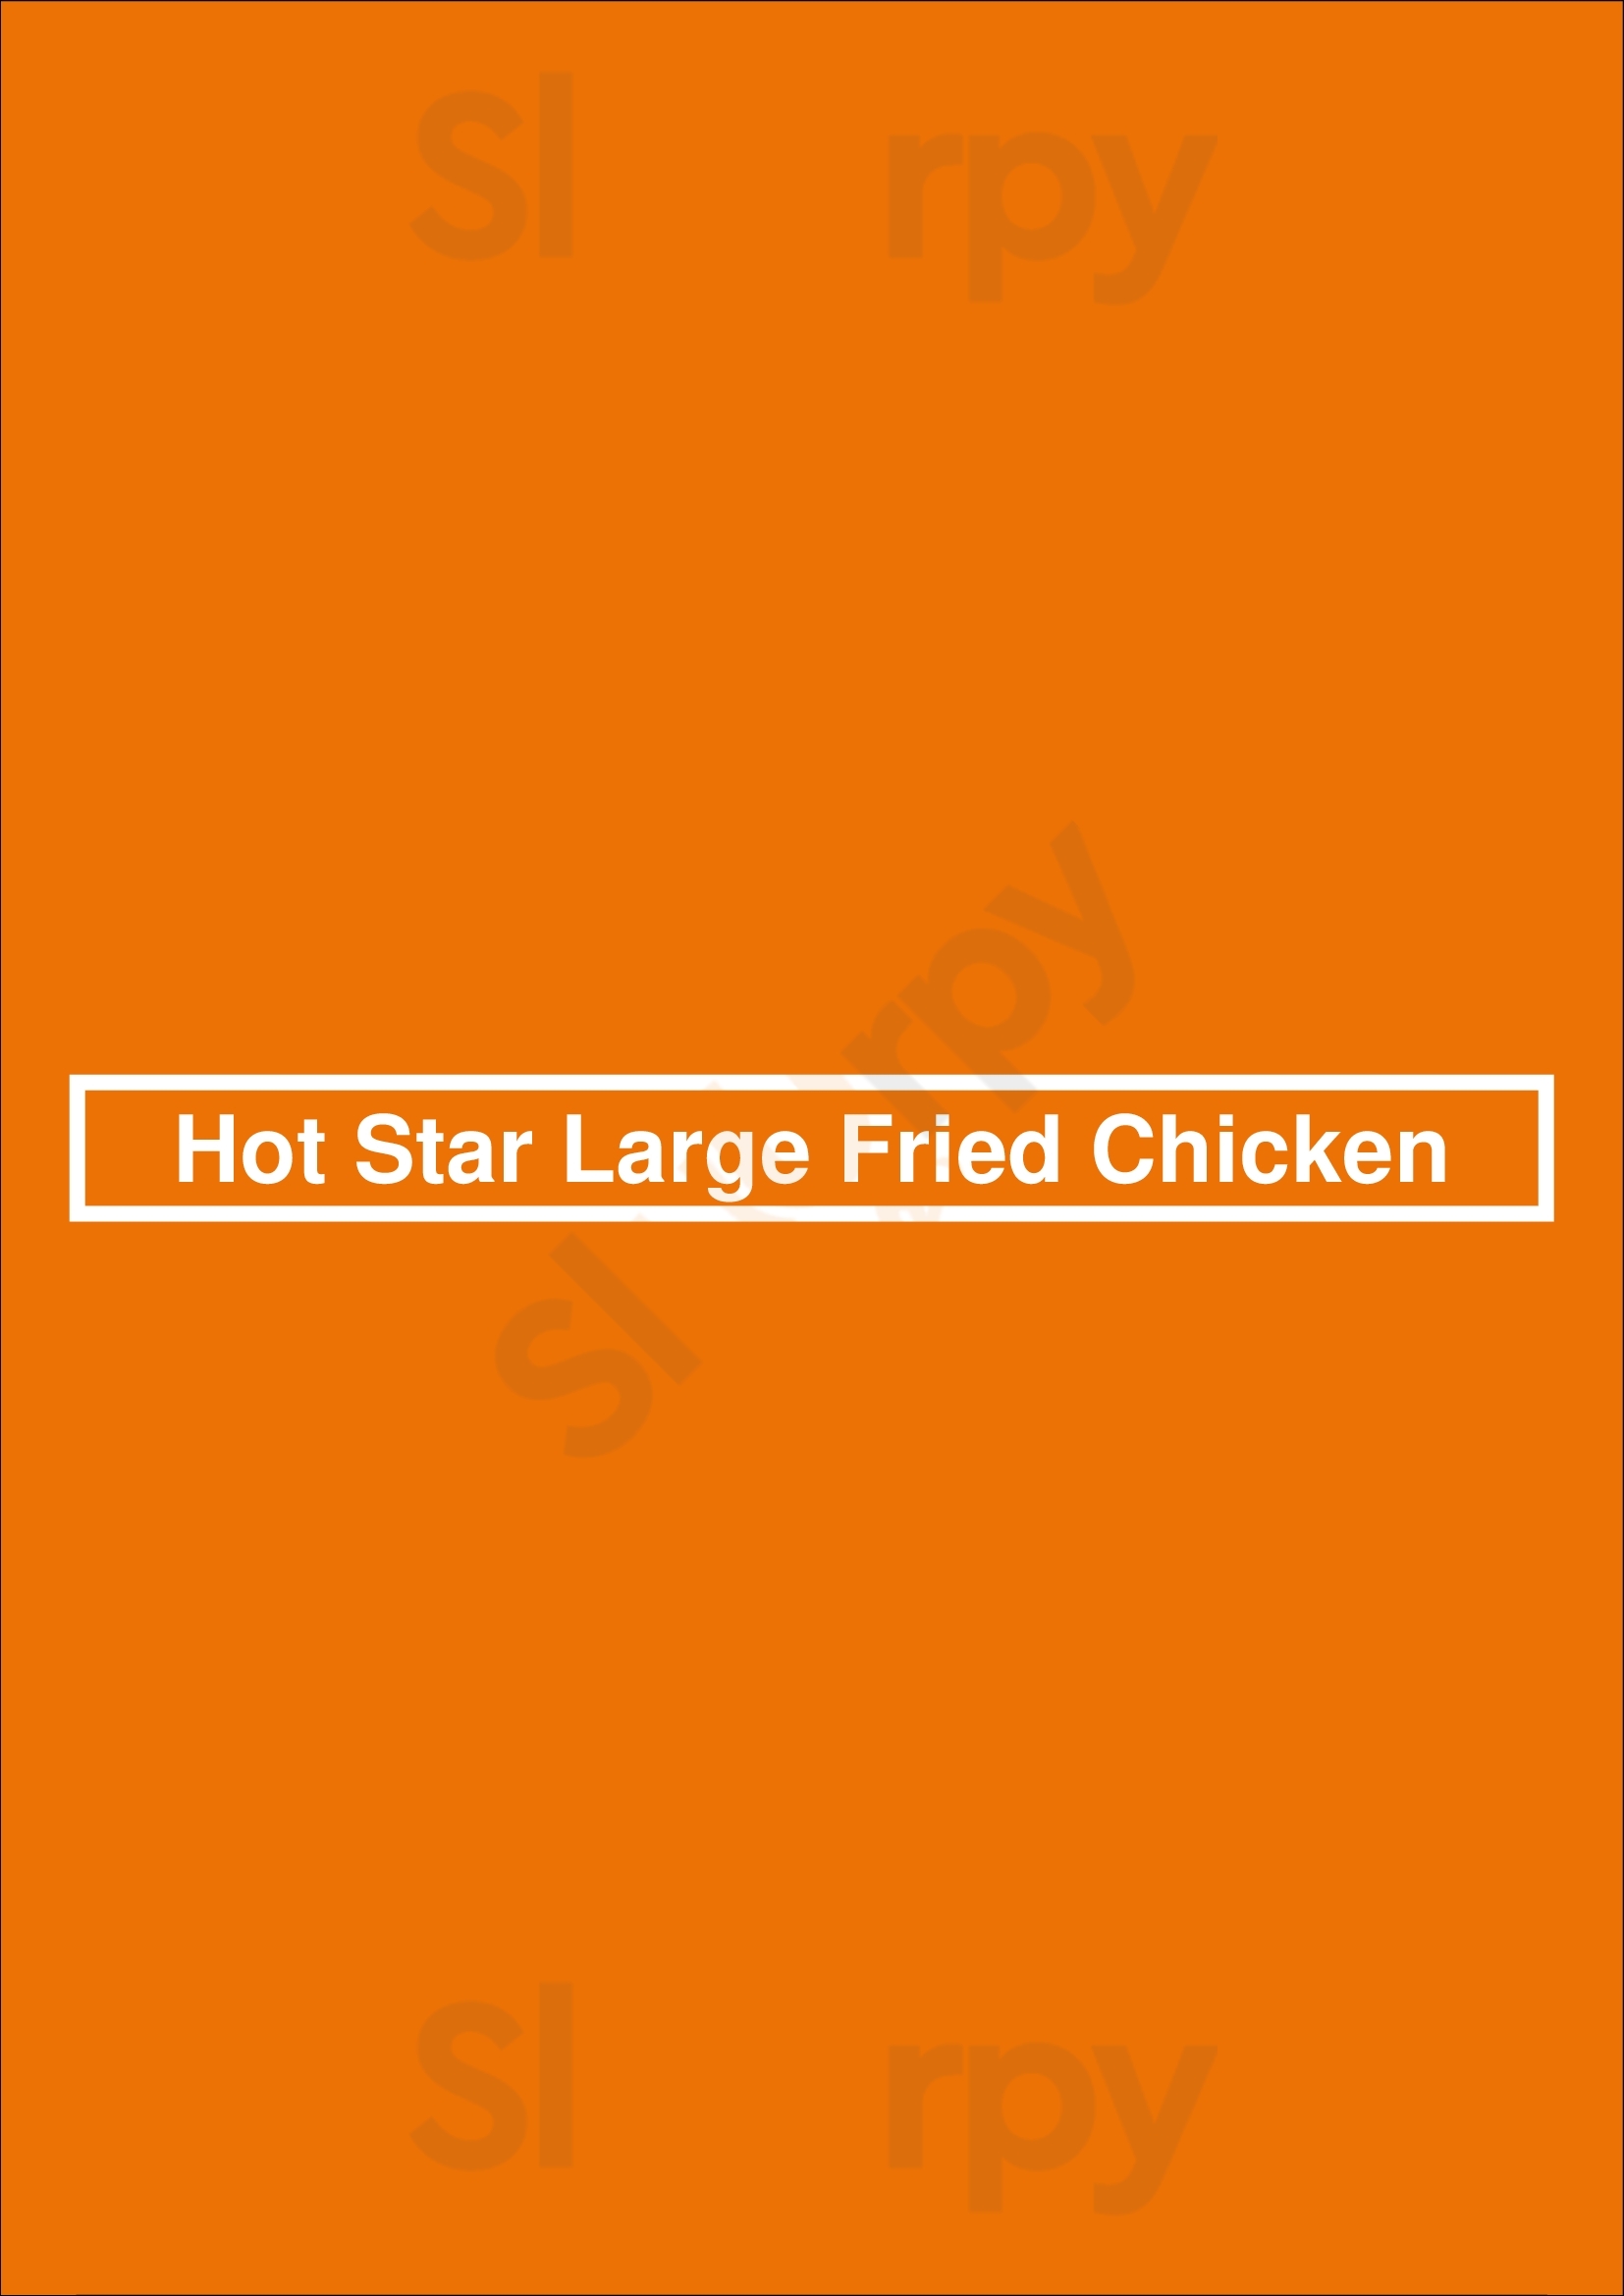 Hot Star Large Fried Chicken Markham Menu - 1